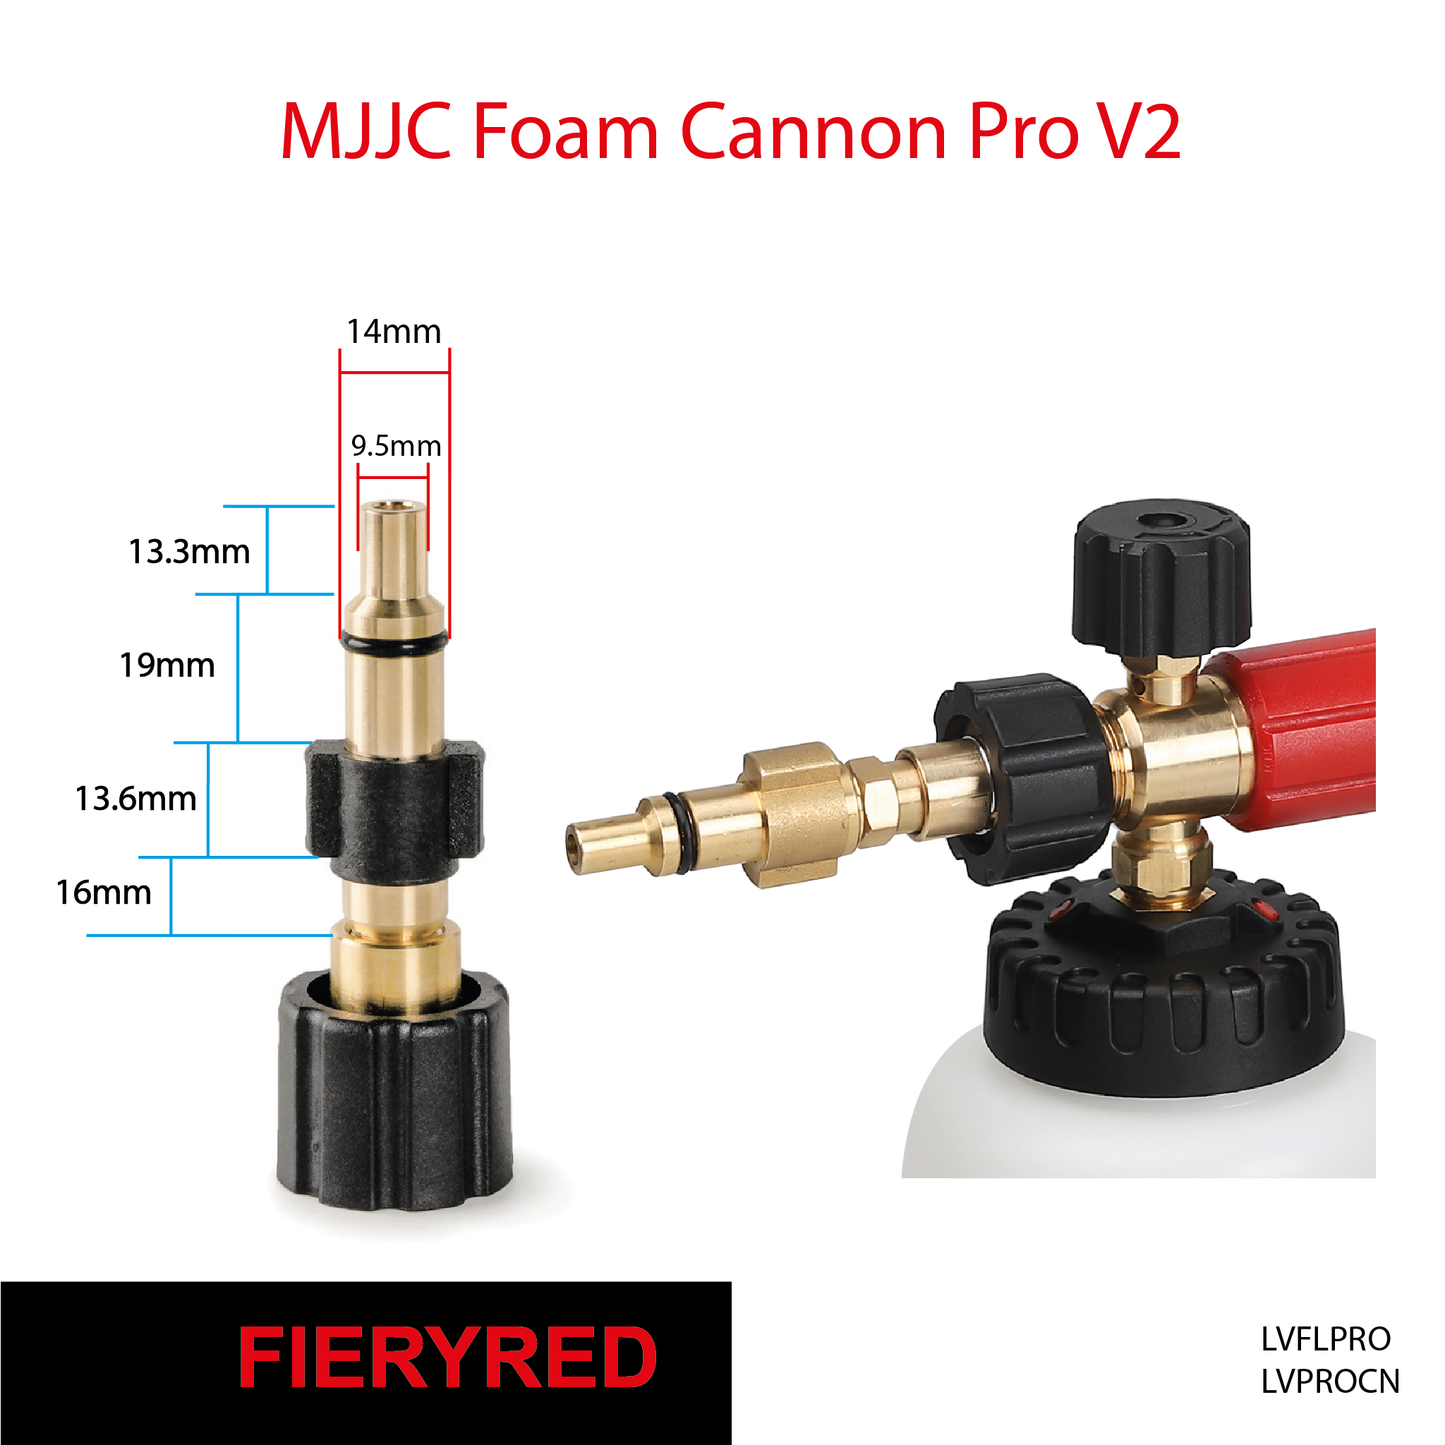 Fieryred pressure washer - MJJC Foam Cannon Pro V2 (Pressure Washer Snow Foam Lance Gun)